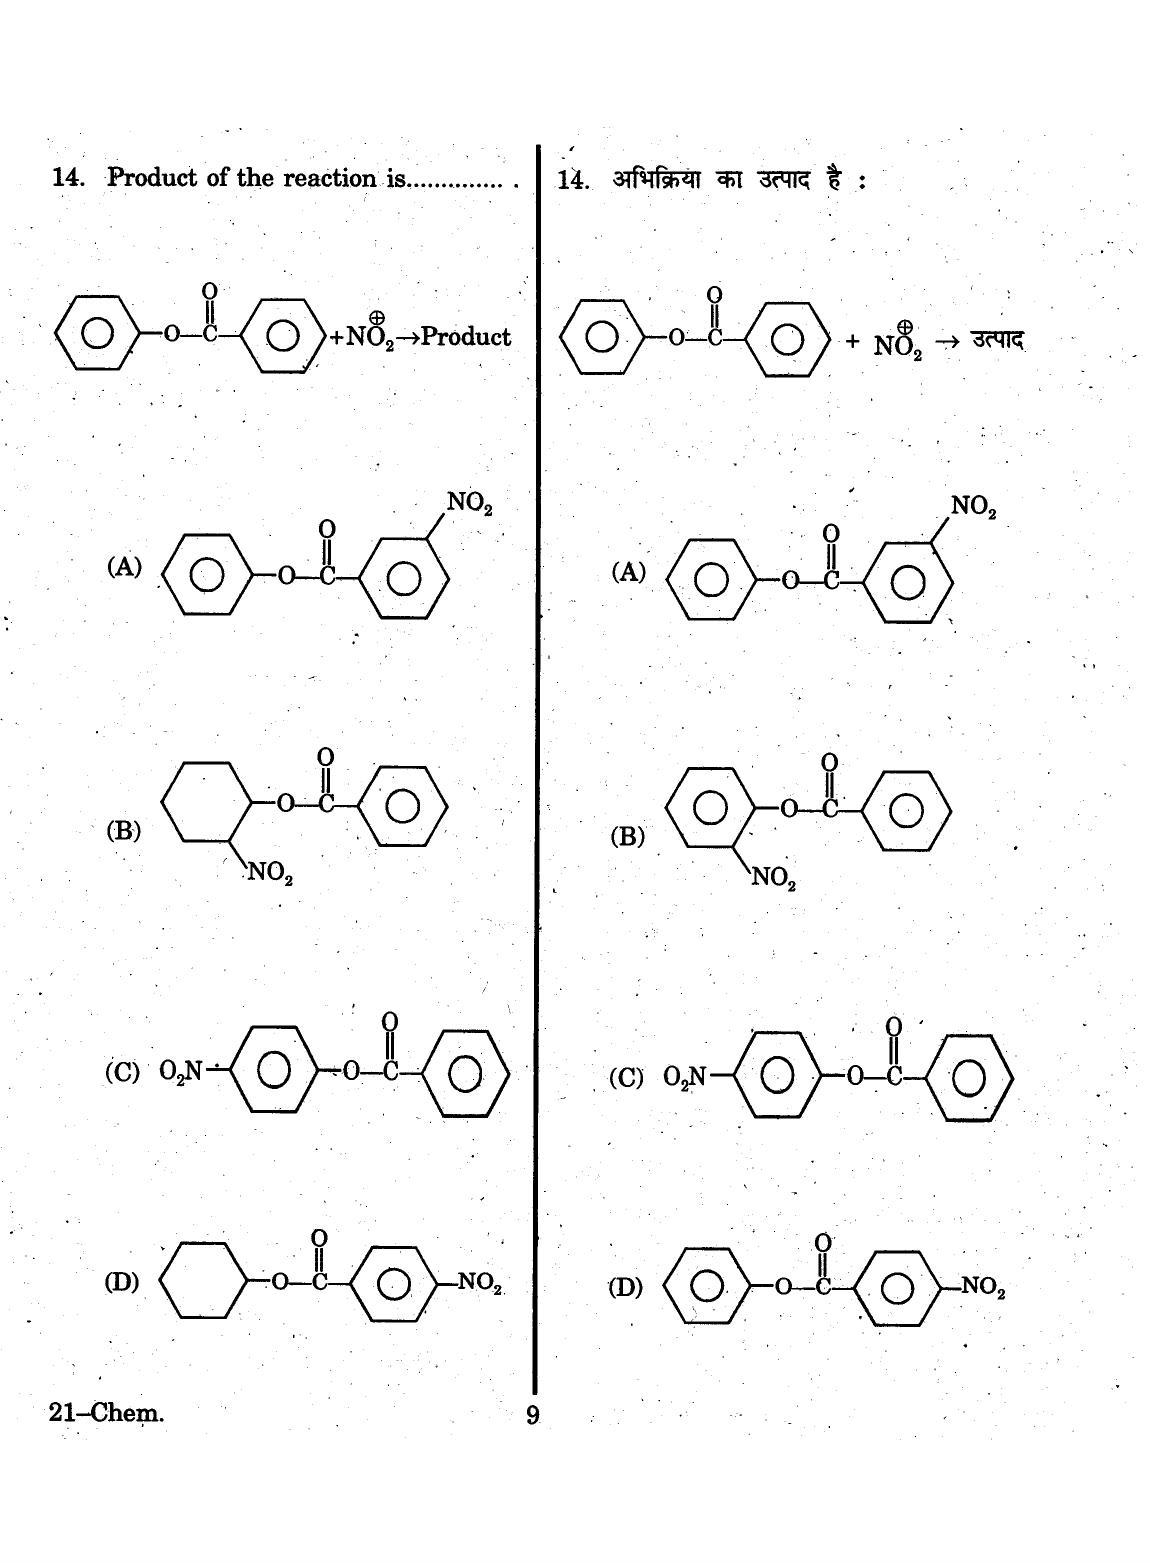 URATPG 2015 Chemisty Question Paper - Page 9